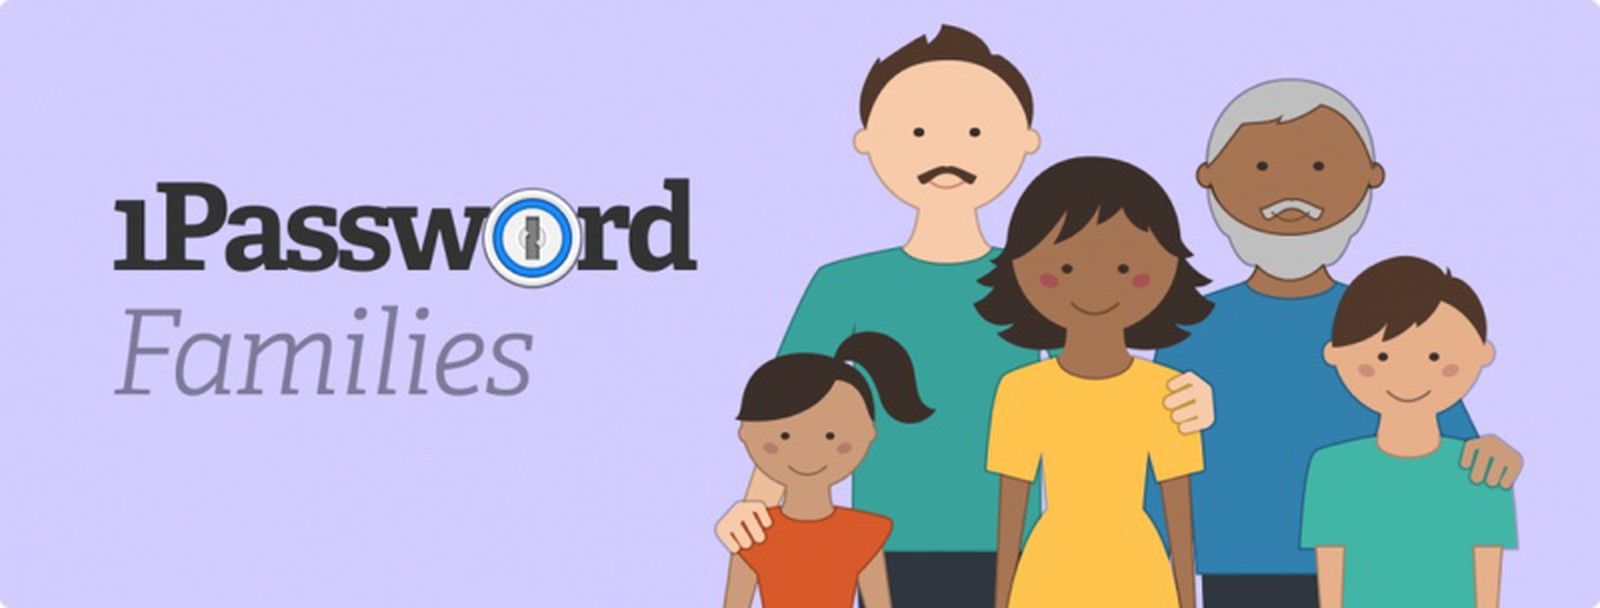 1password families